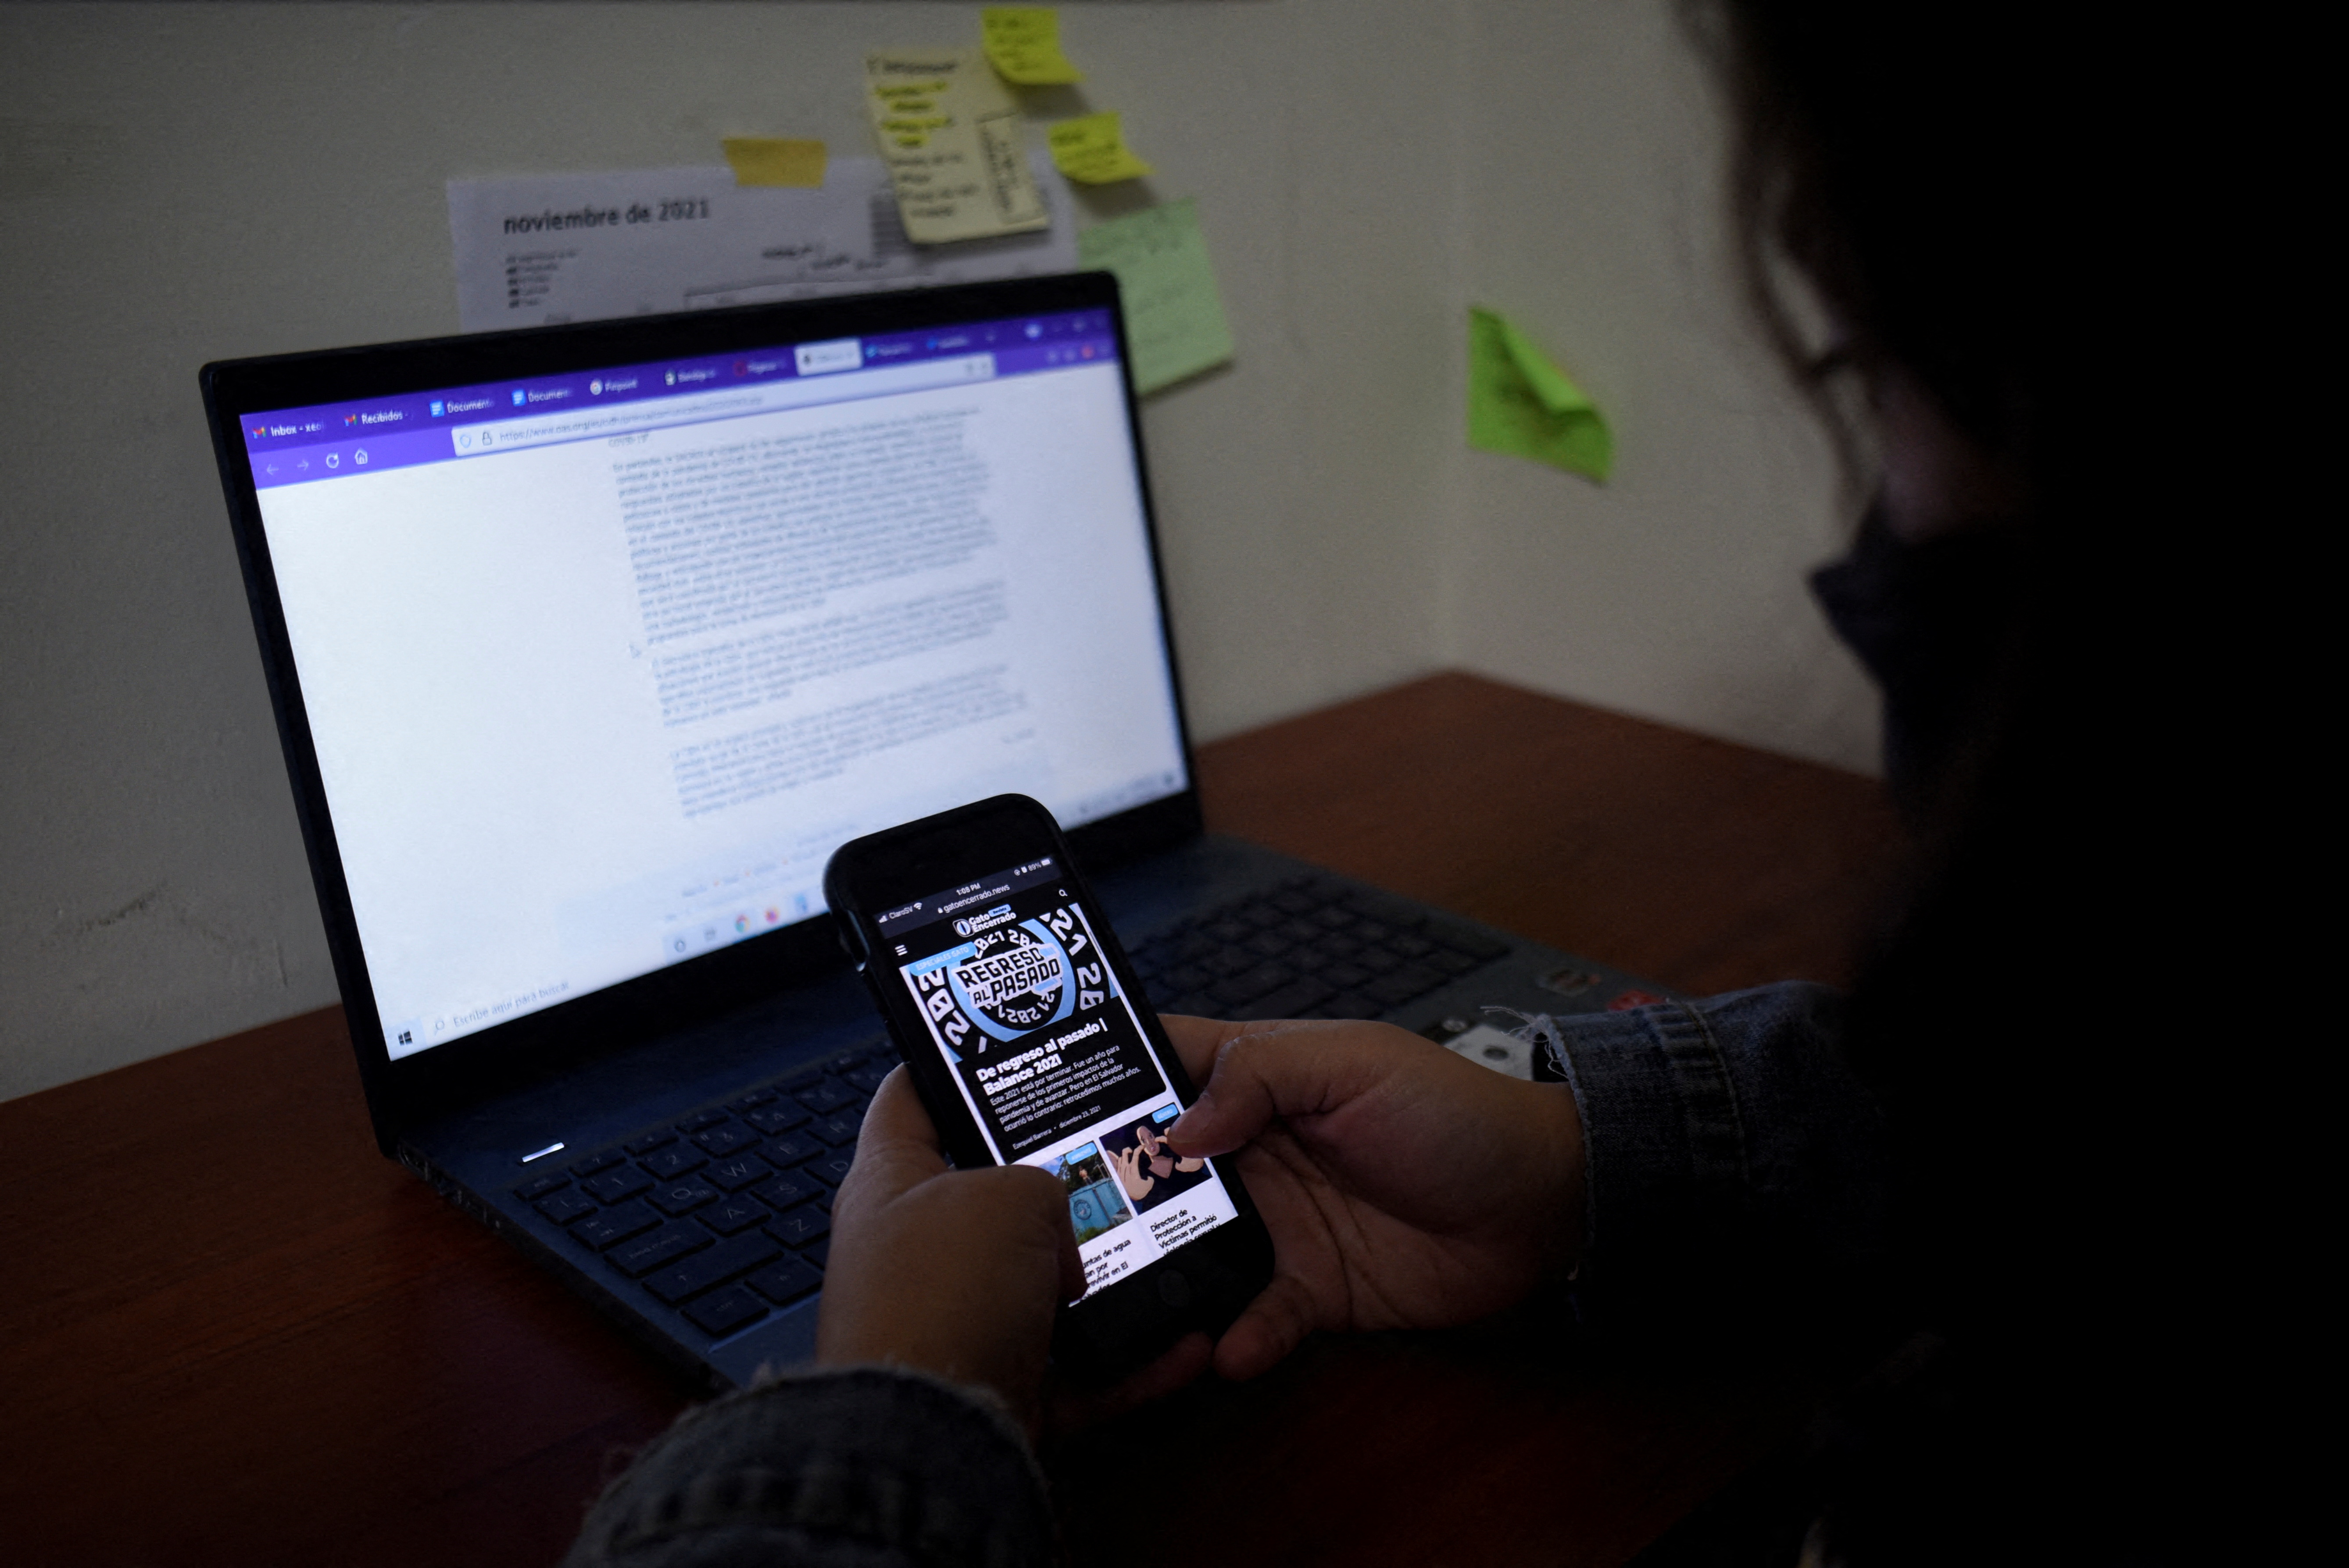 Salvadoran journalists' phones hacked with spyware, report finds